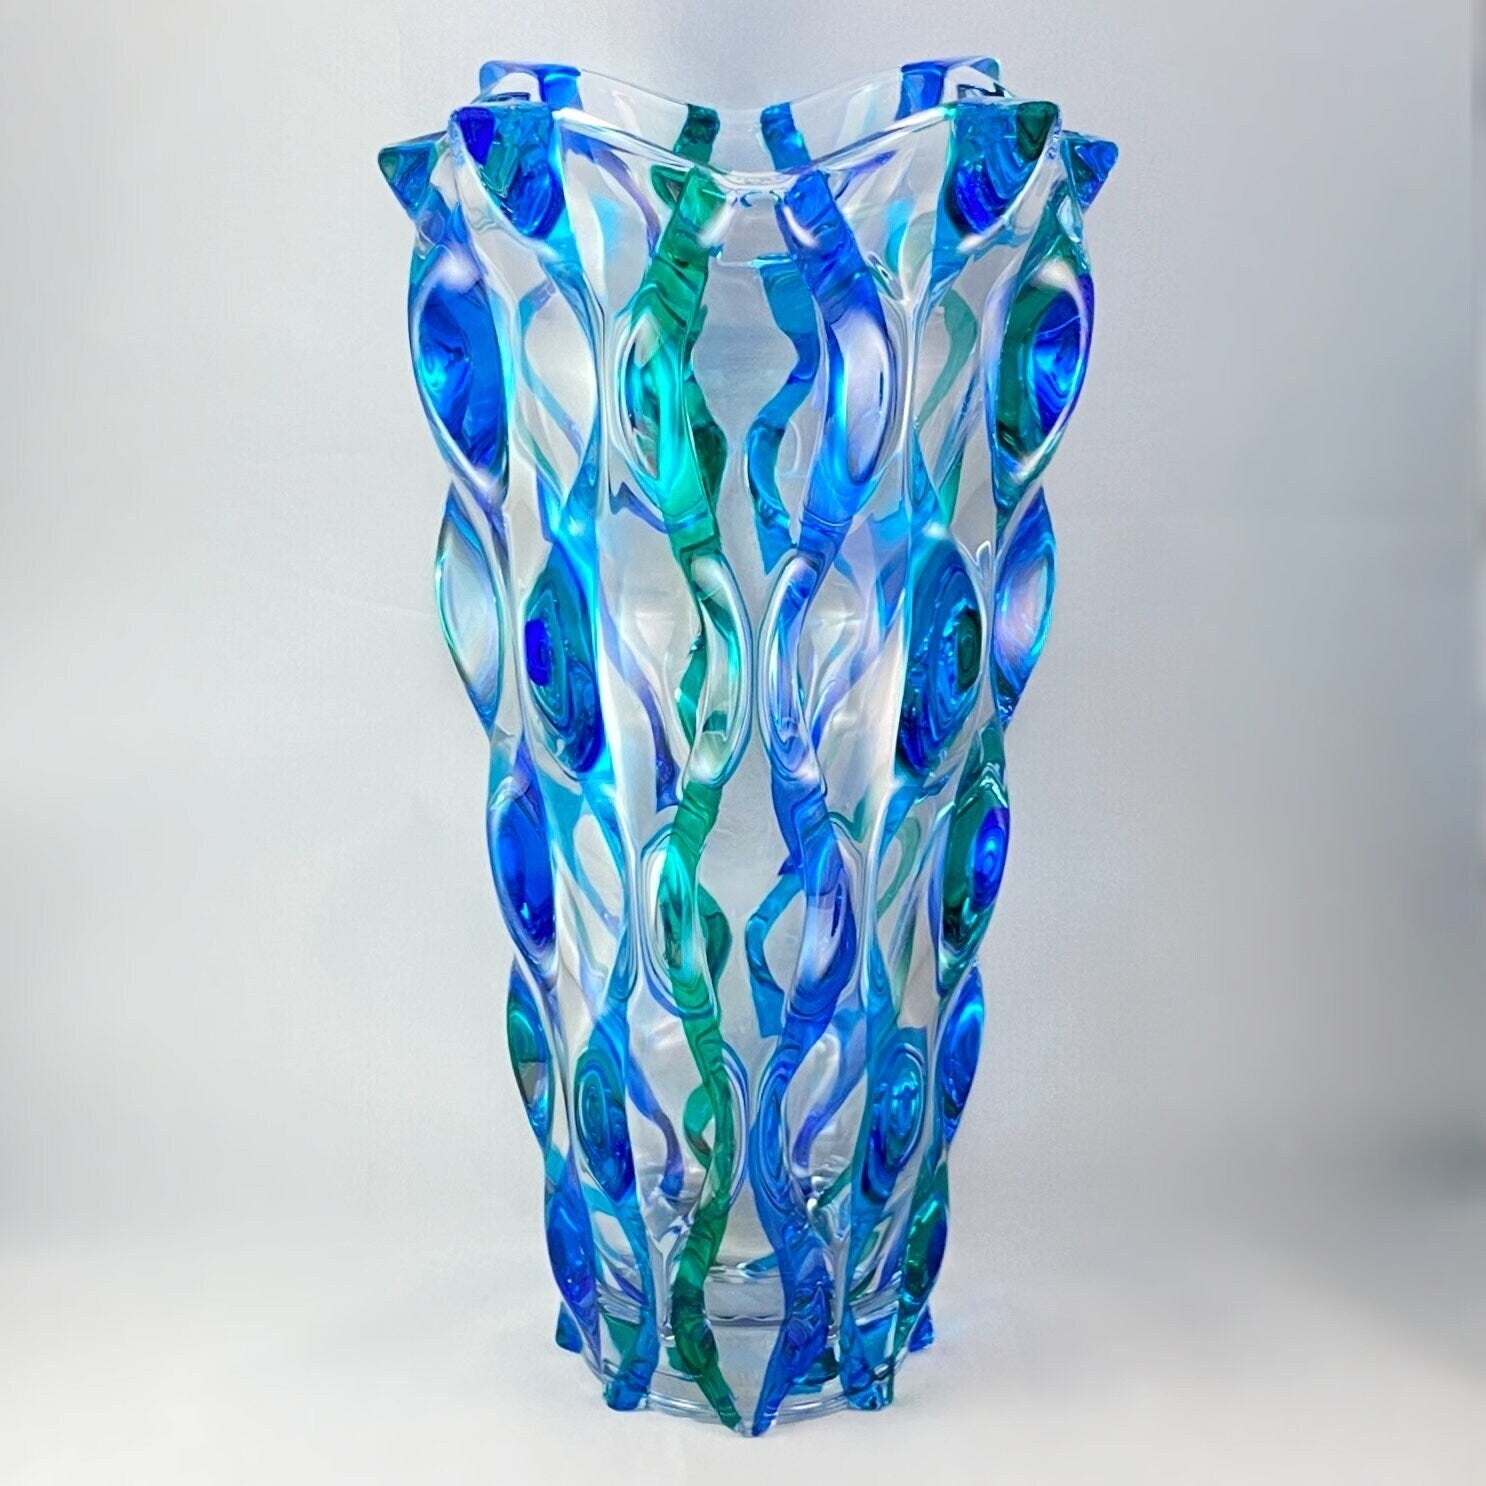 Venetian Glass Ribbon Samba Vase - Handmade in Italy, Colorful Murano Glass